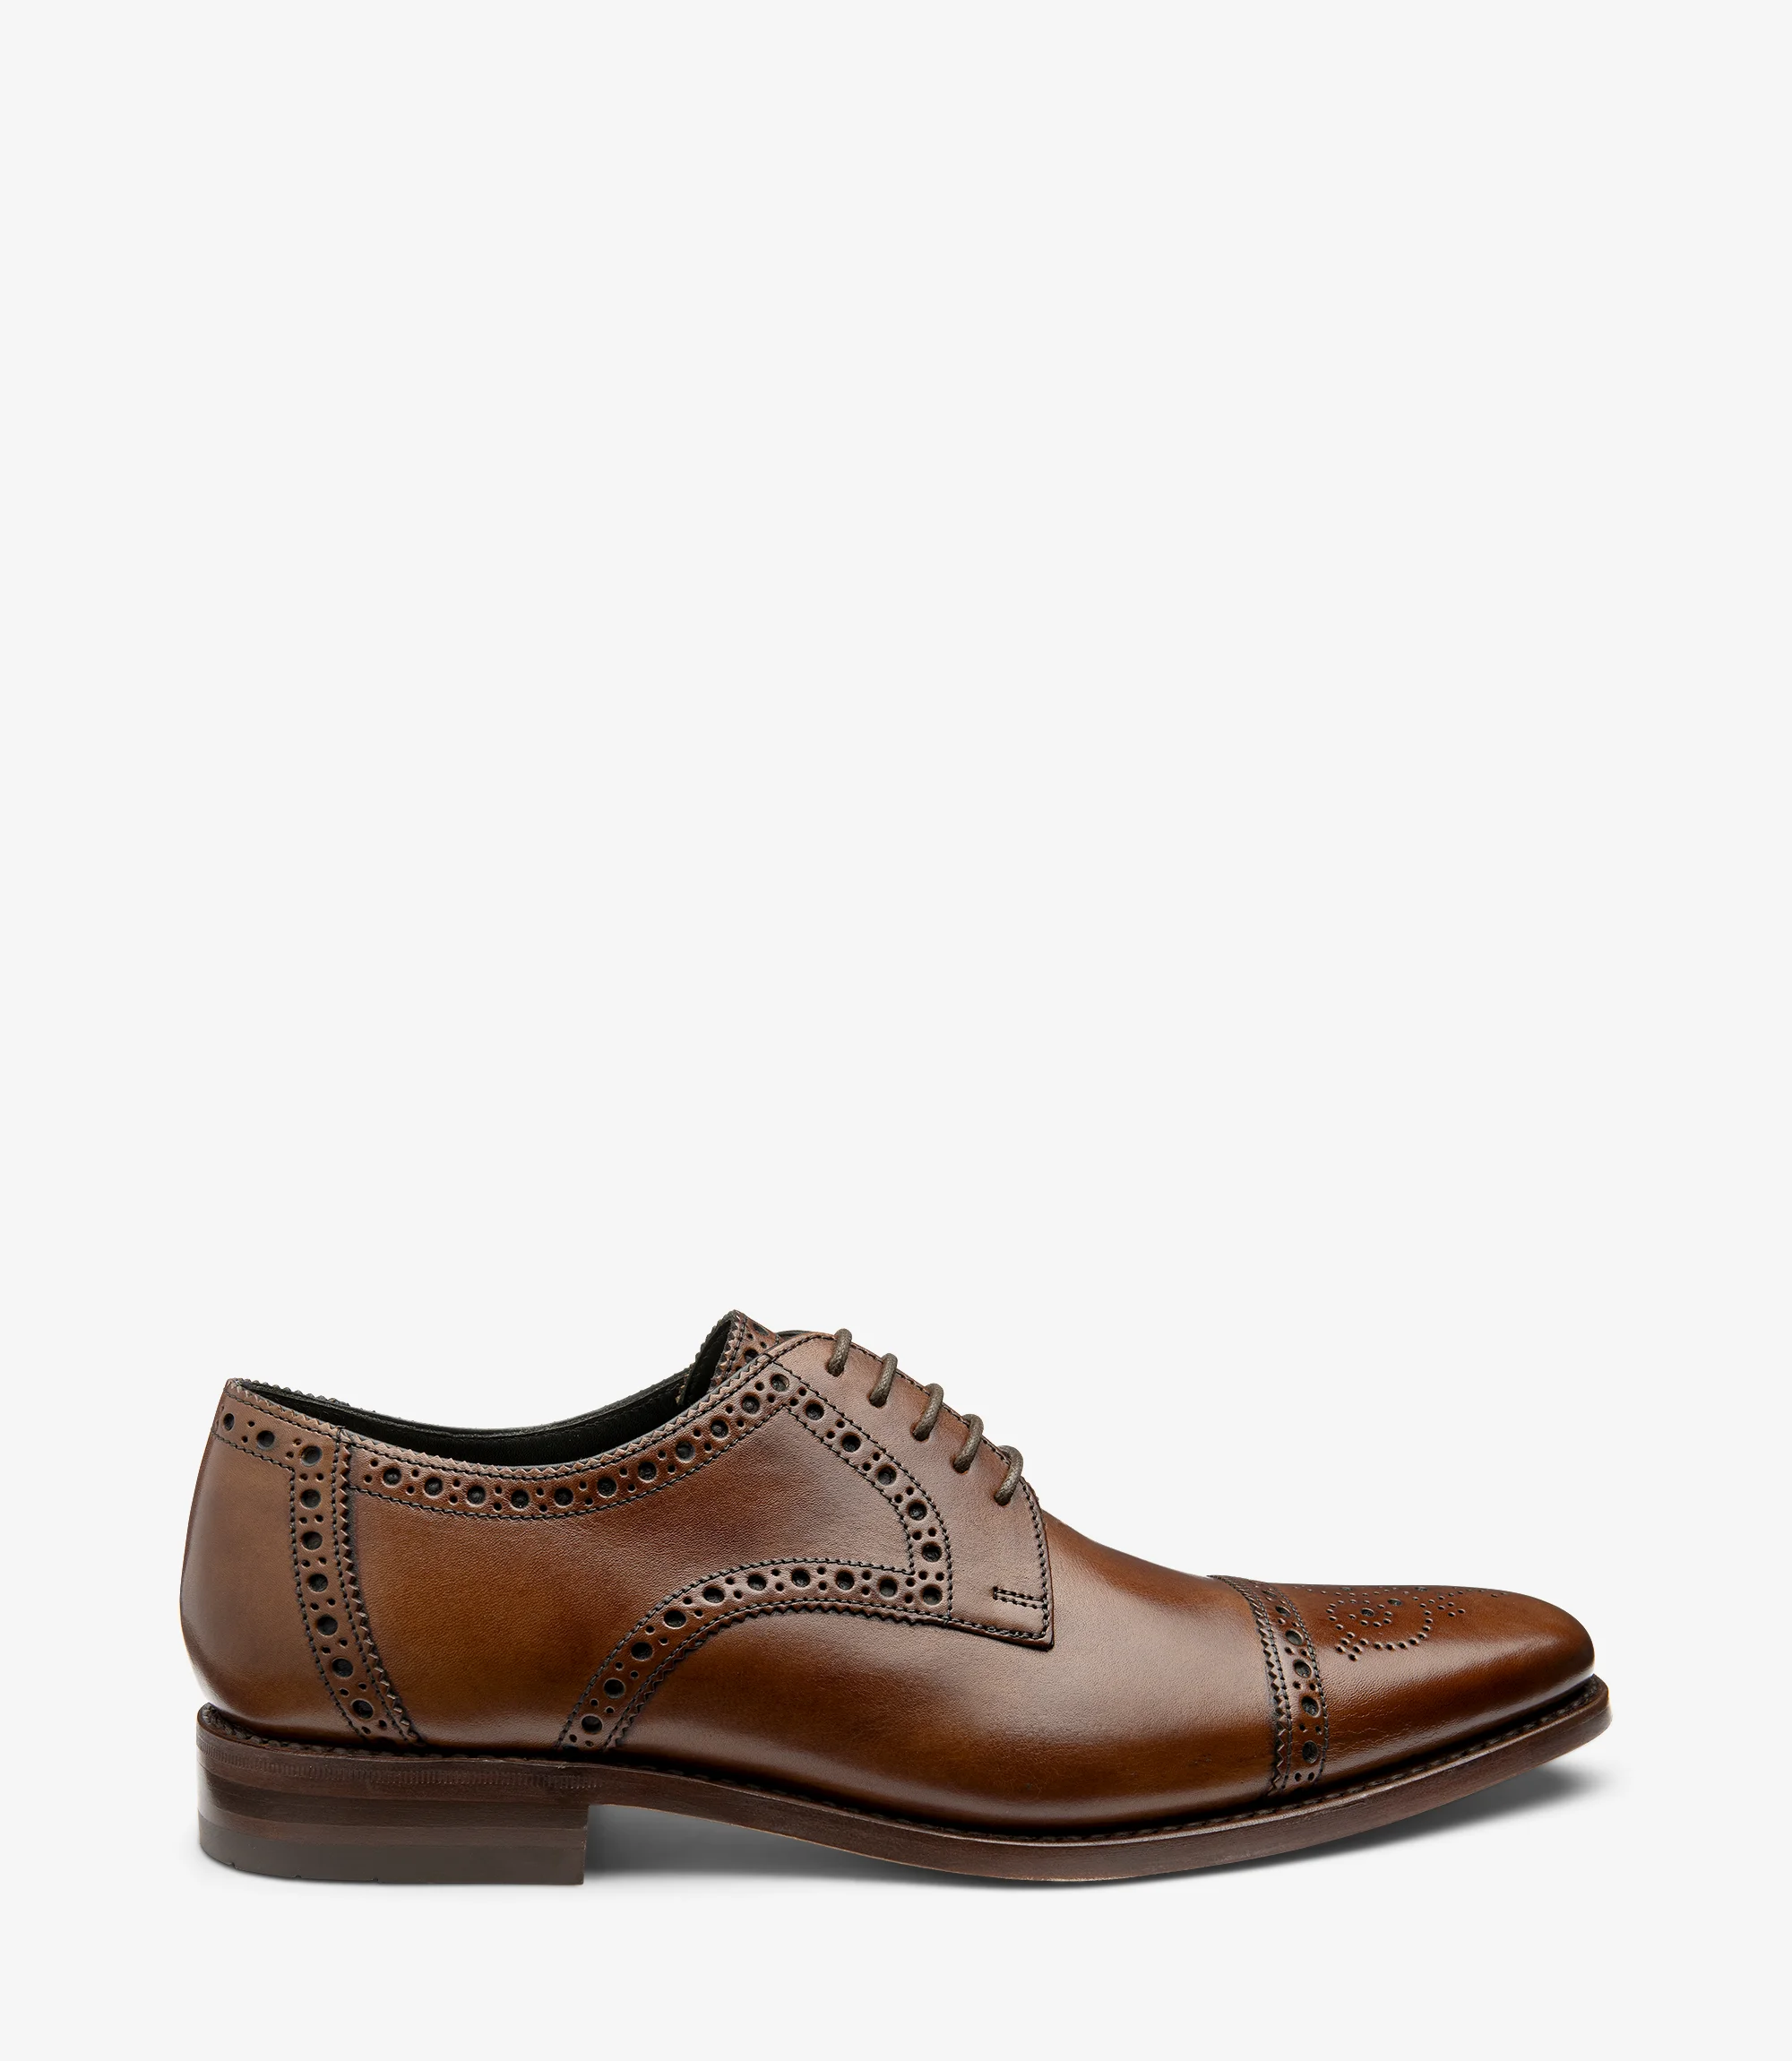 Semi Brogues | English Men's Shoes u0026 Boots | Loake Shoemakers